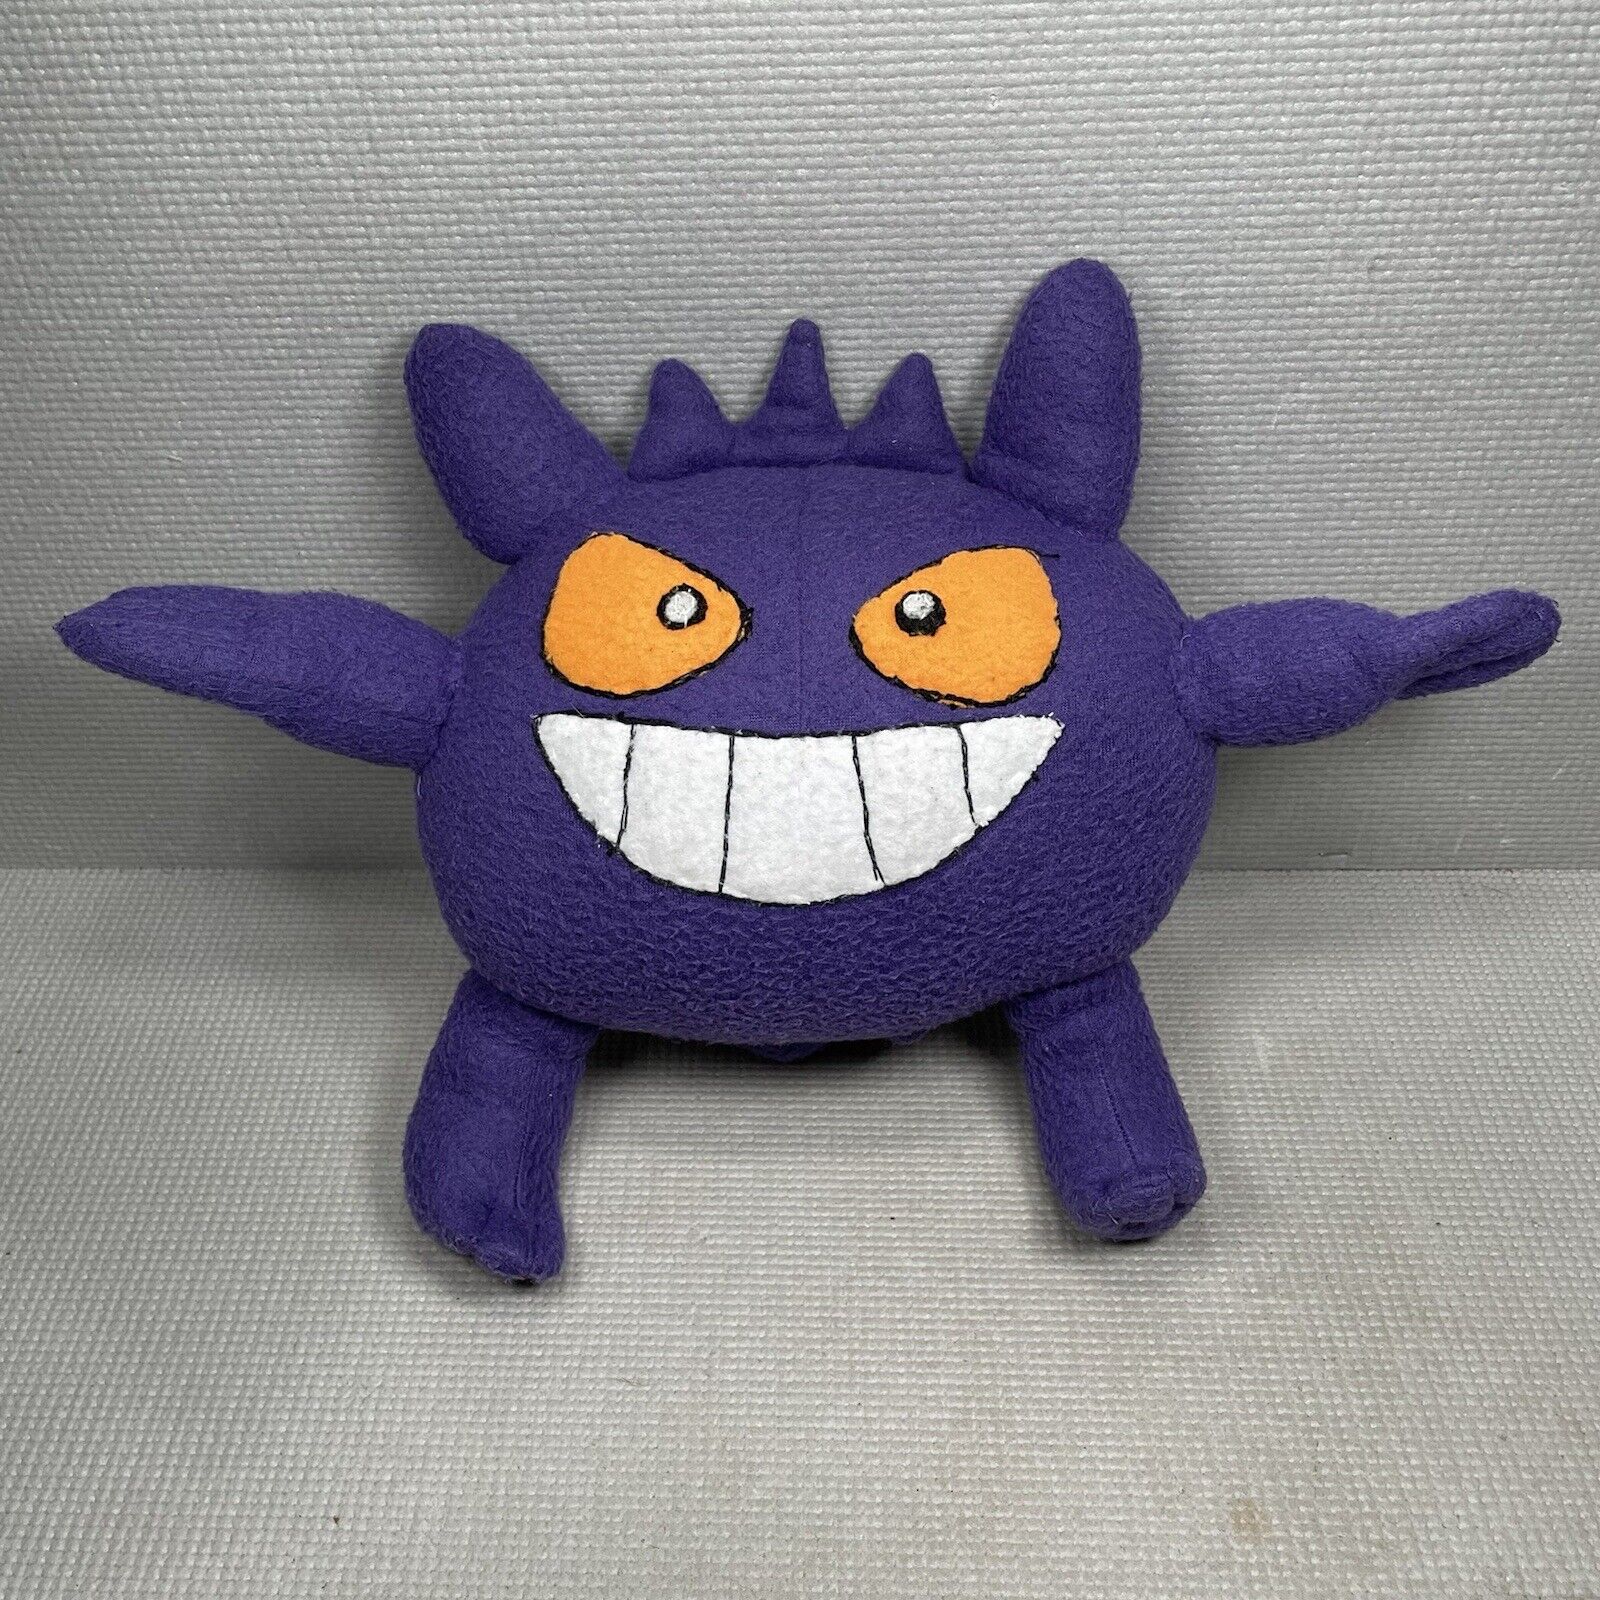 Pokémon Gengar Plush Hand Made Stuffed Animal OOAK Purple Pocket Monster